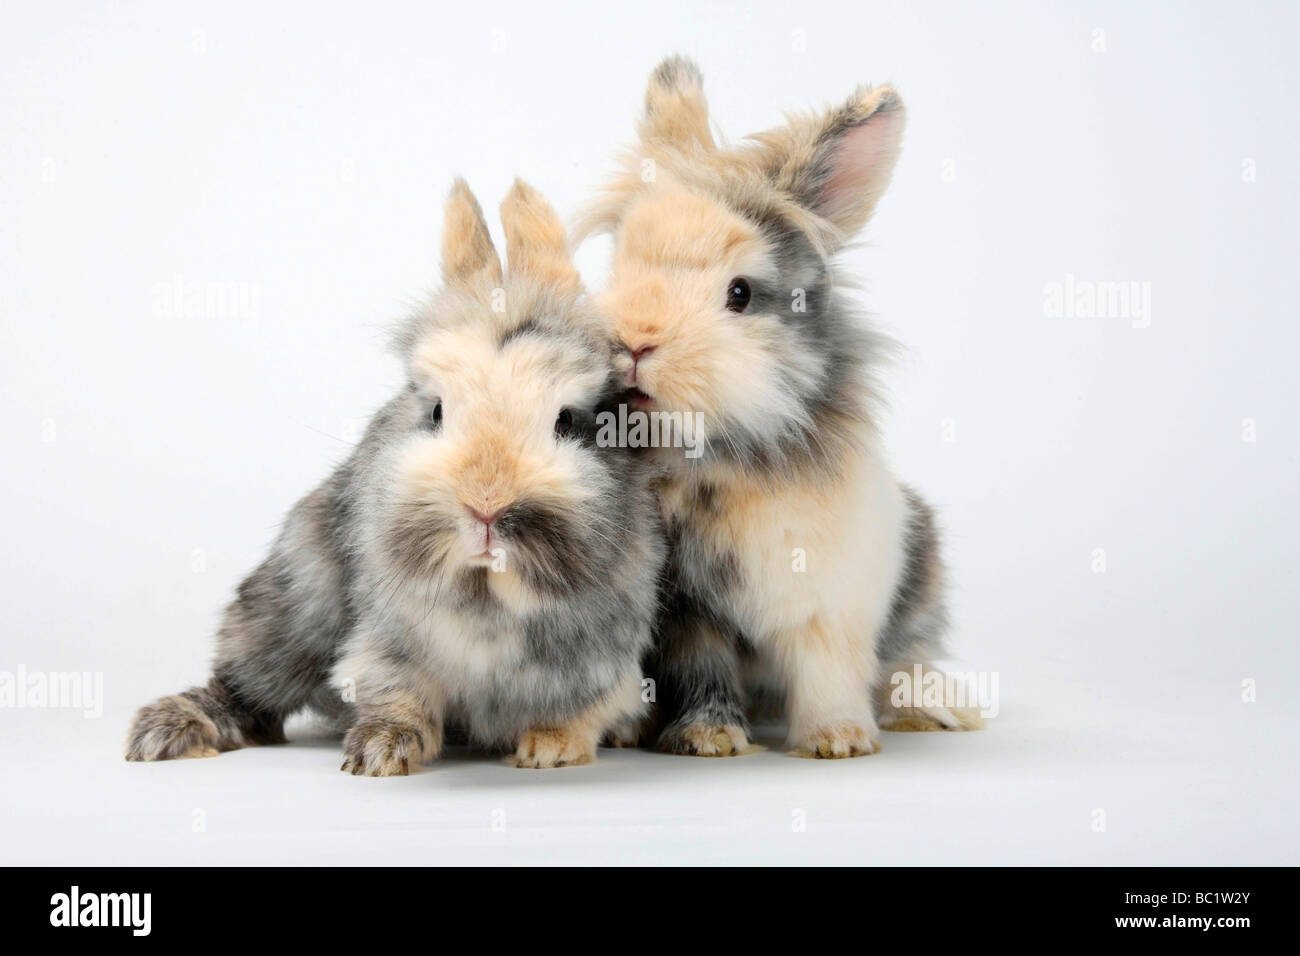 Young Lion-maned Dwarf Rabbits Domestic Rabbit Stock Photo